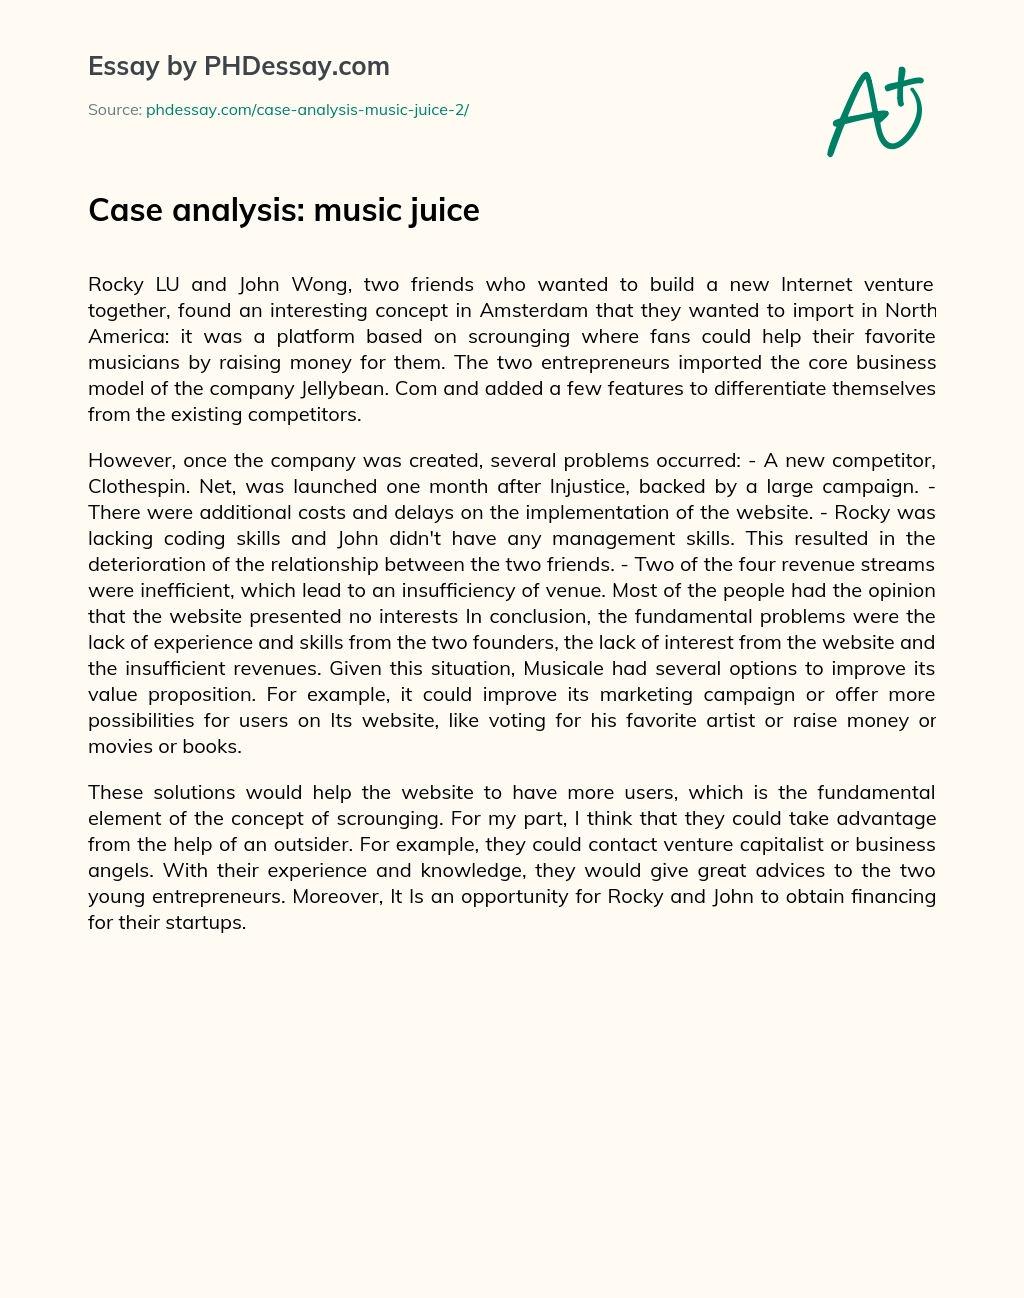 Case analysis: music juice essay